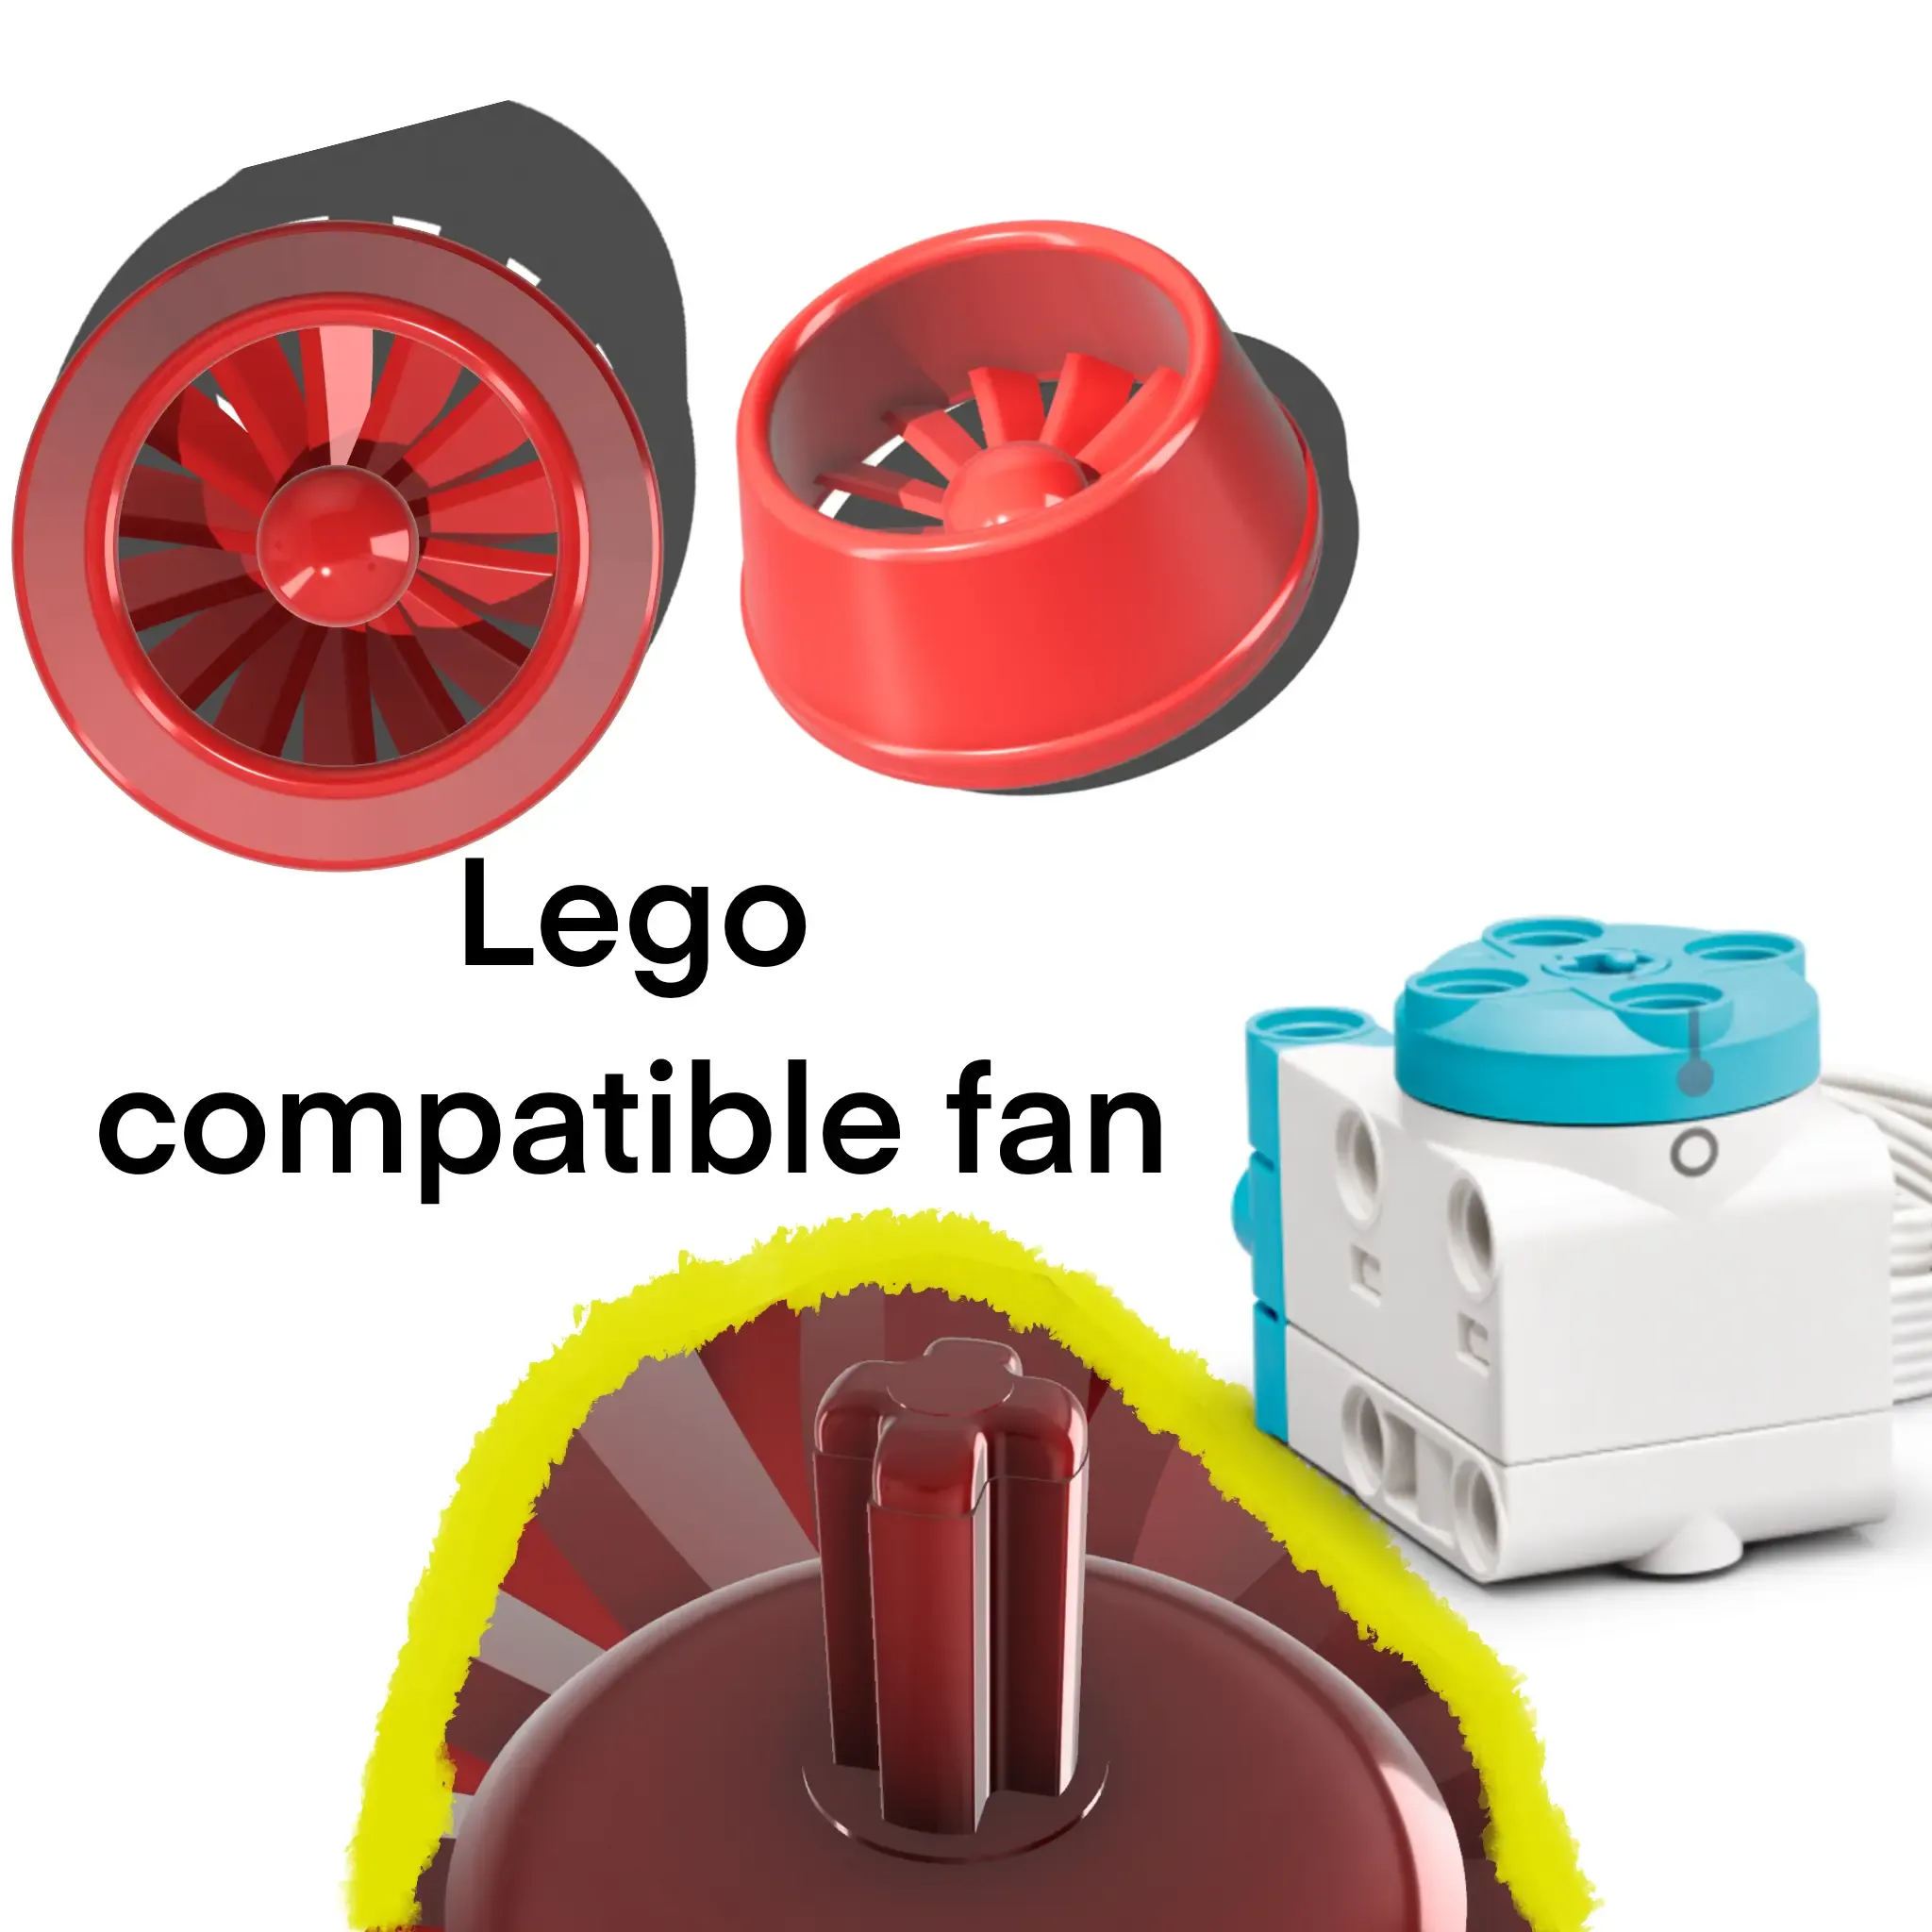 Lego Servo/Motor fan with X mount